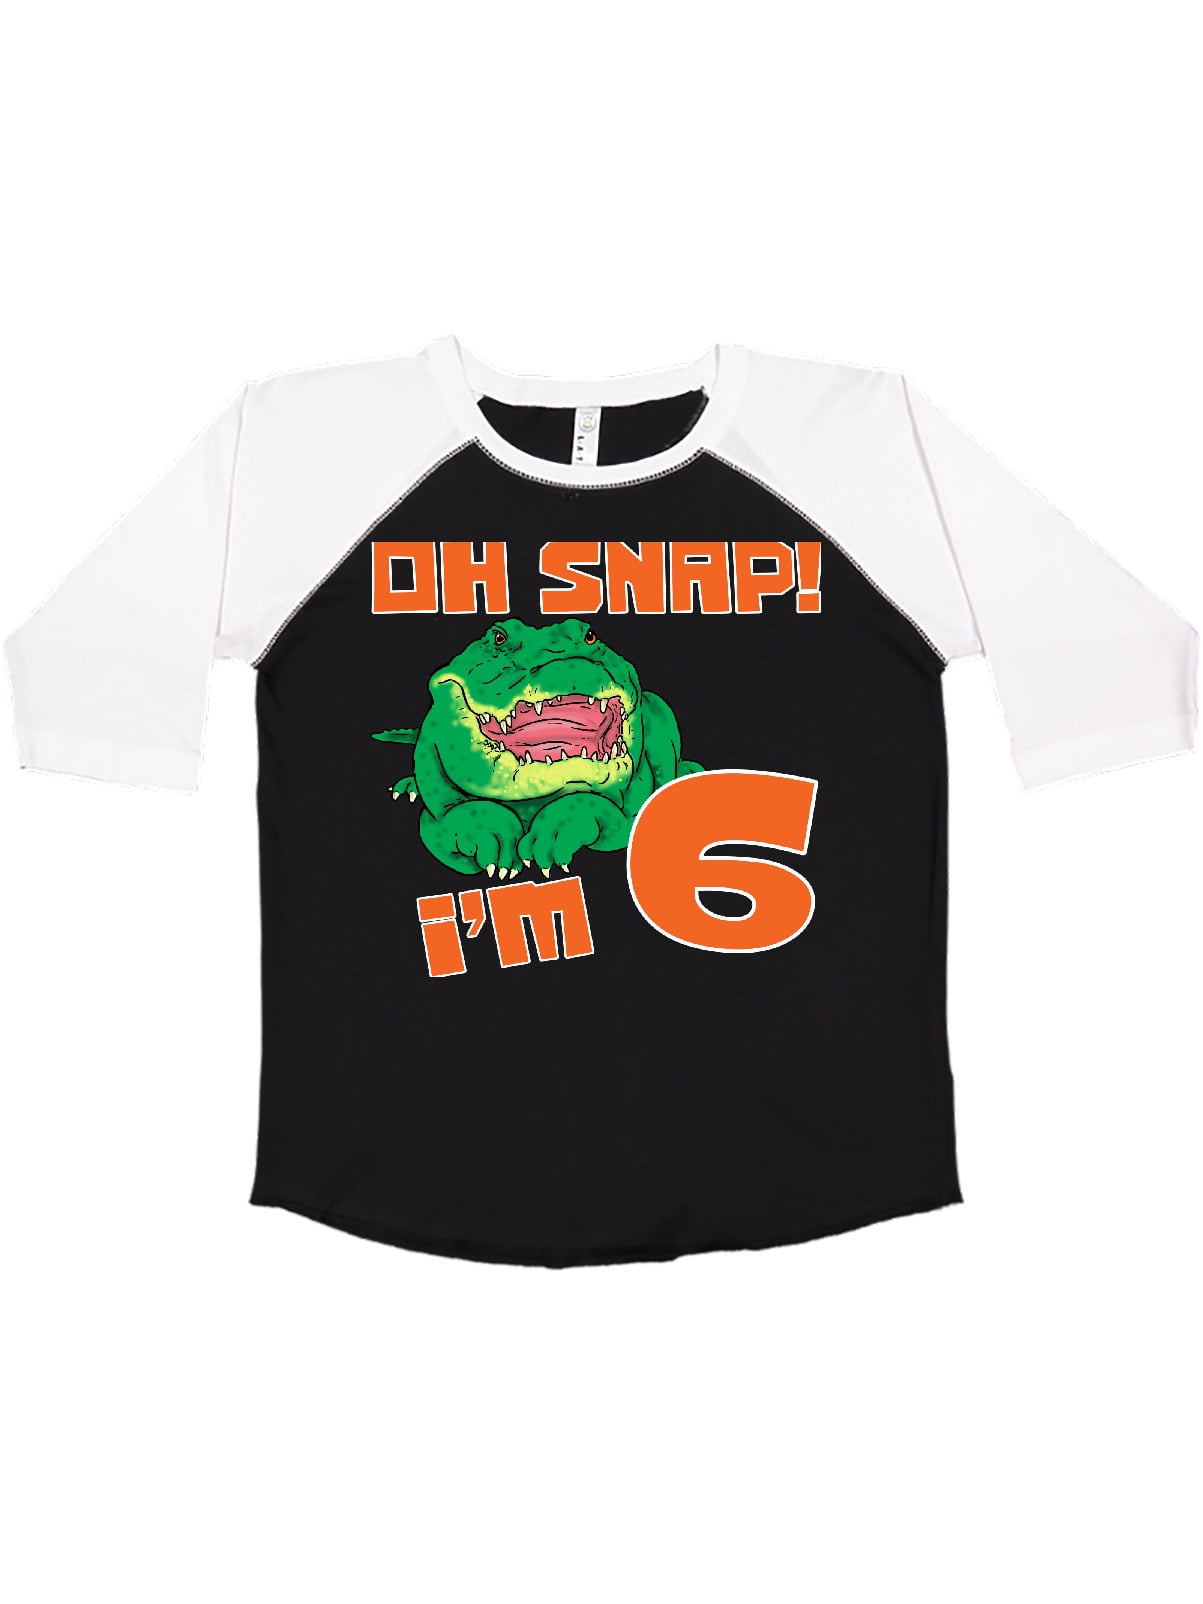 oh snap alligator shirt